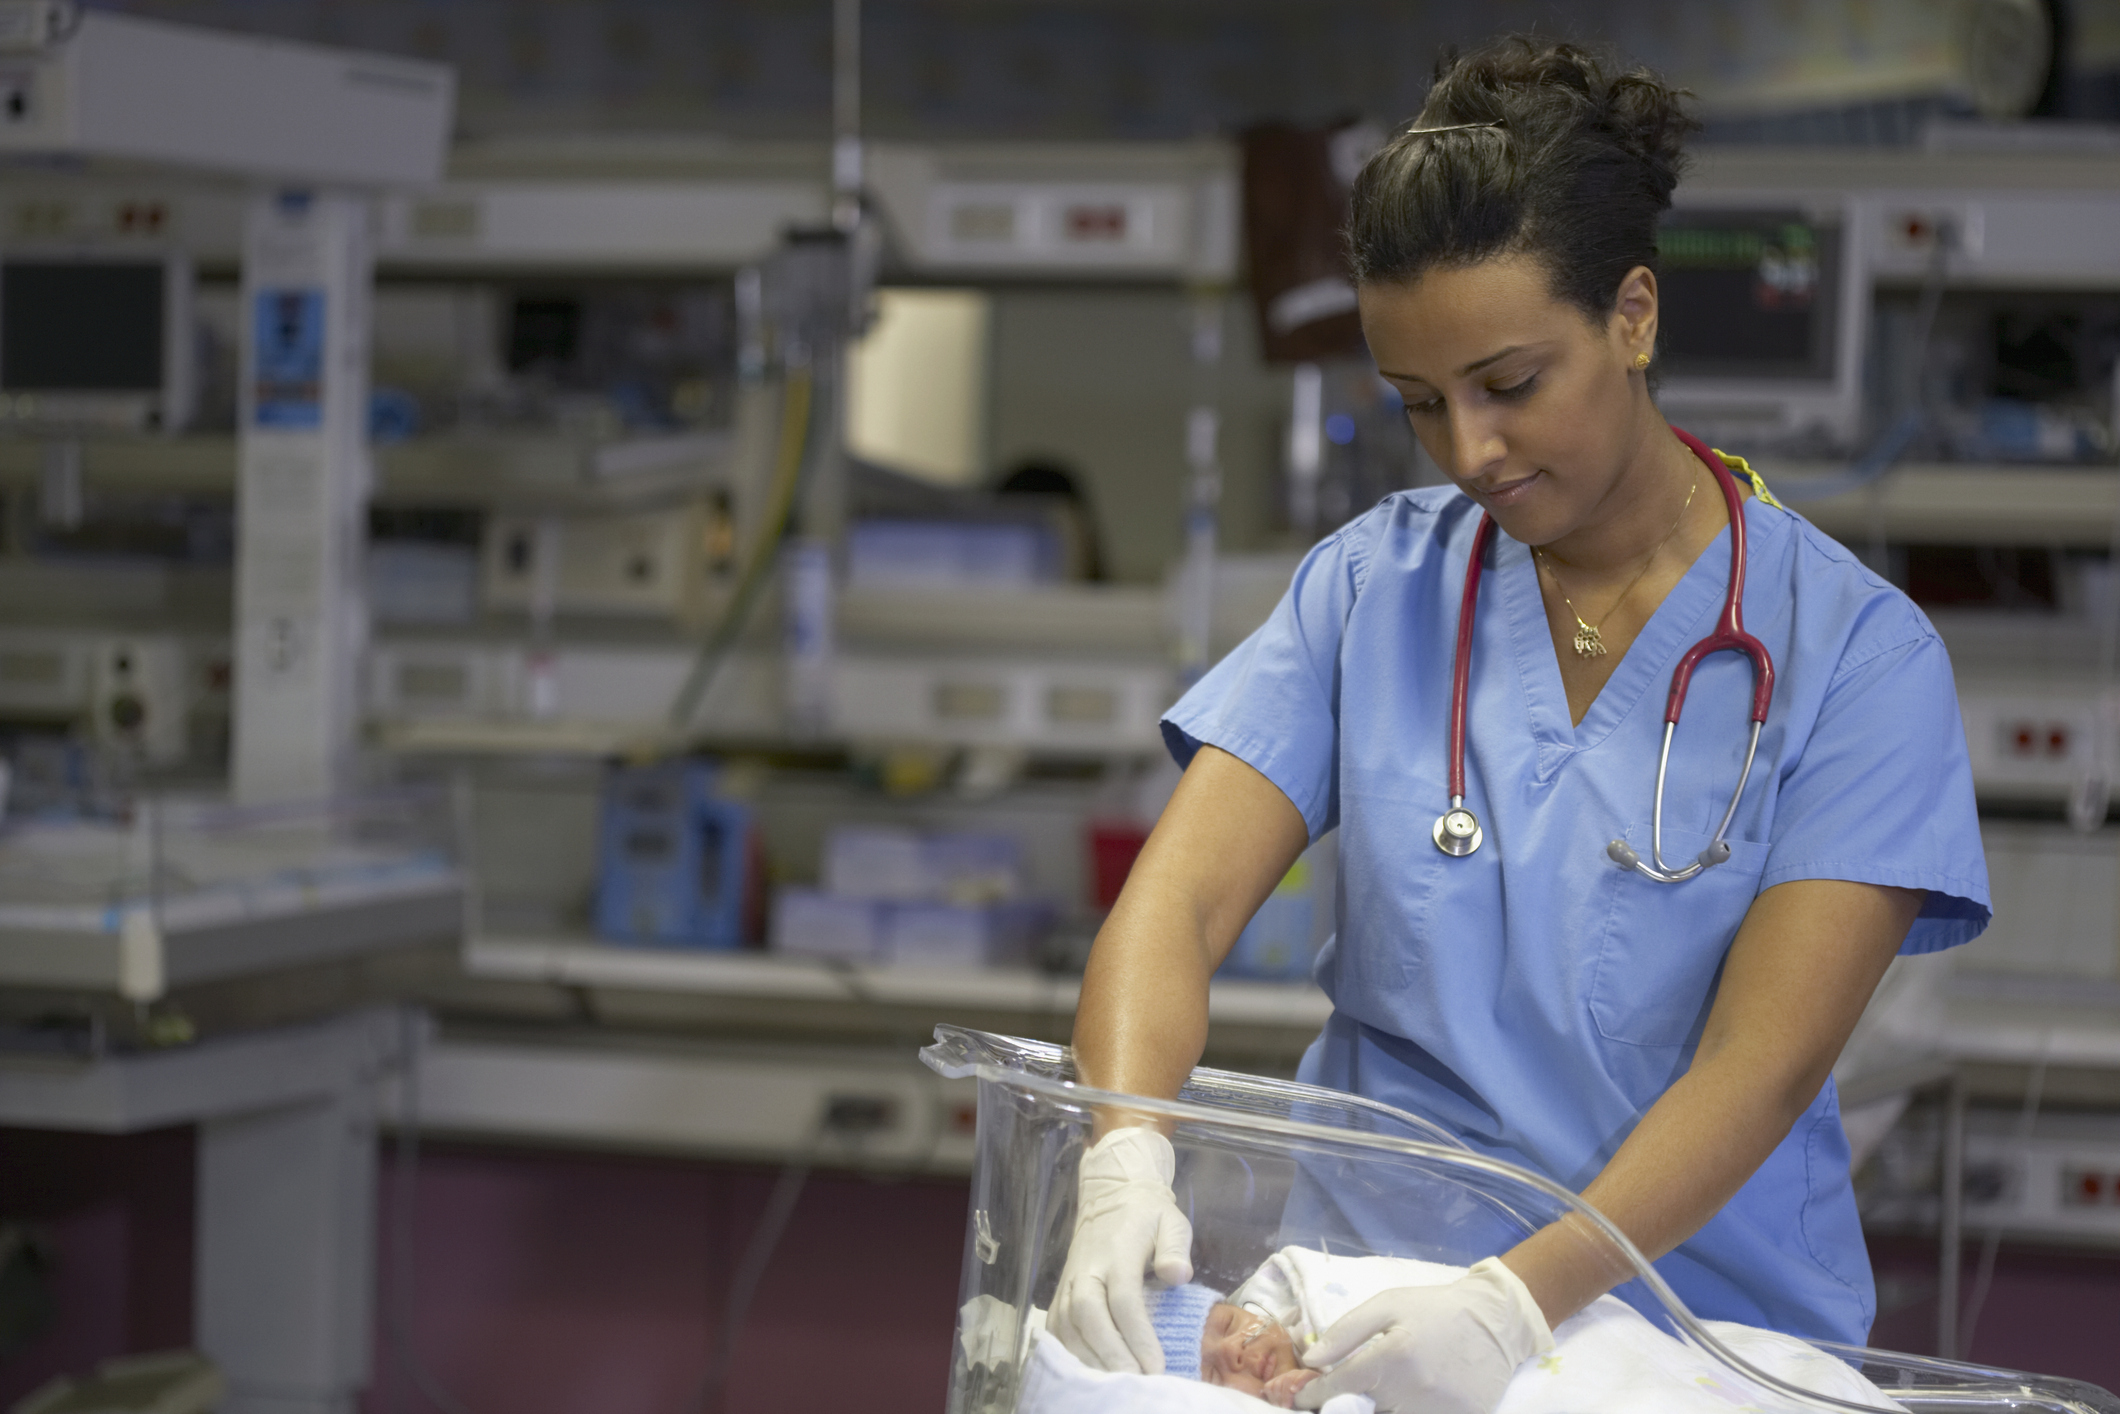 How to Become a Neonatal Nurse